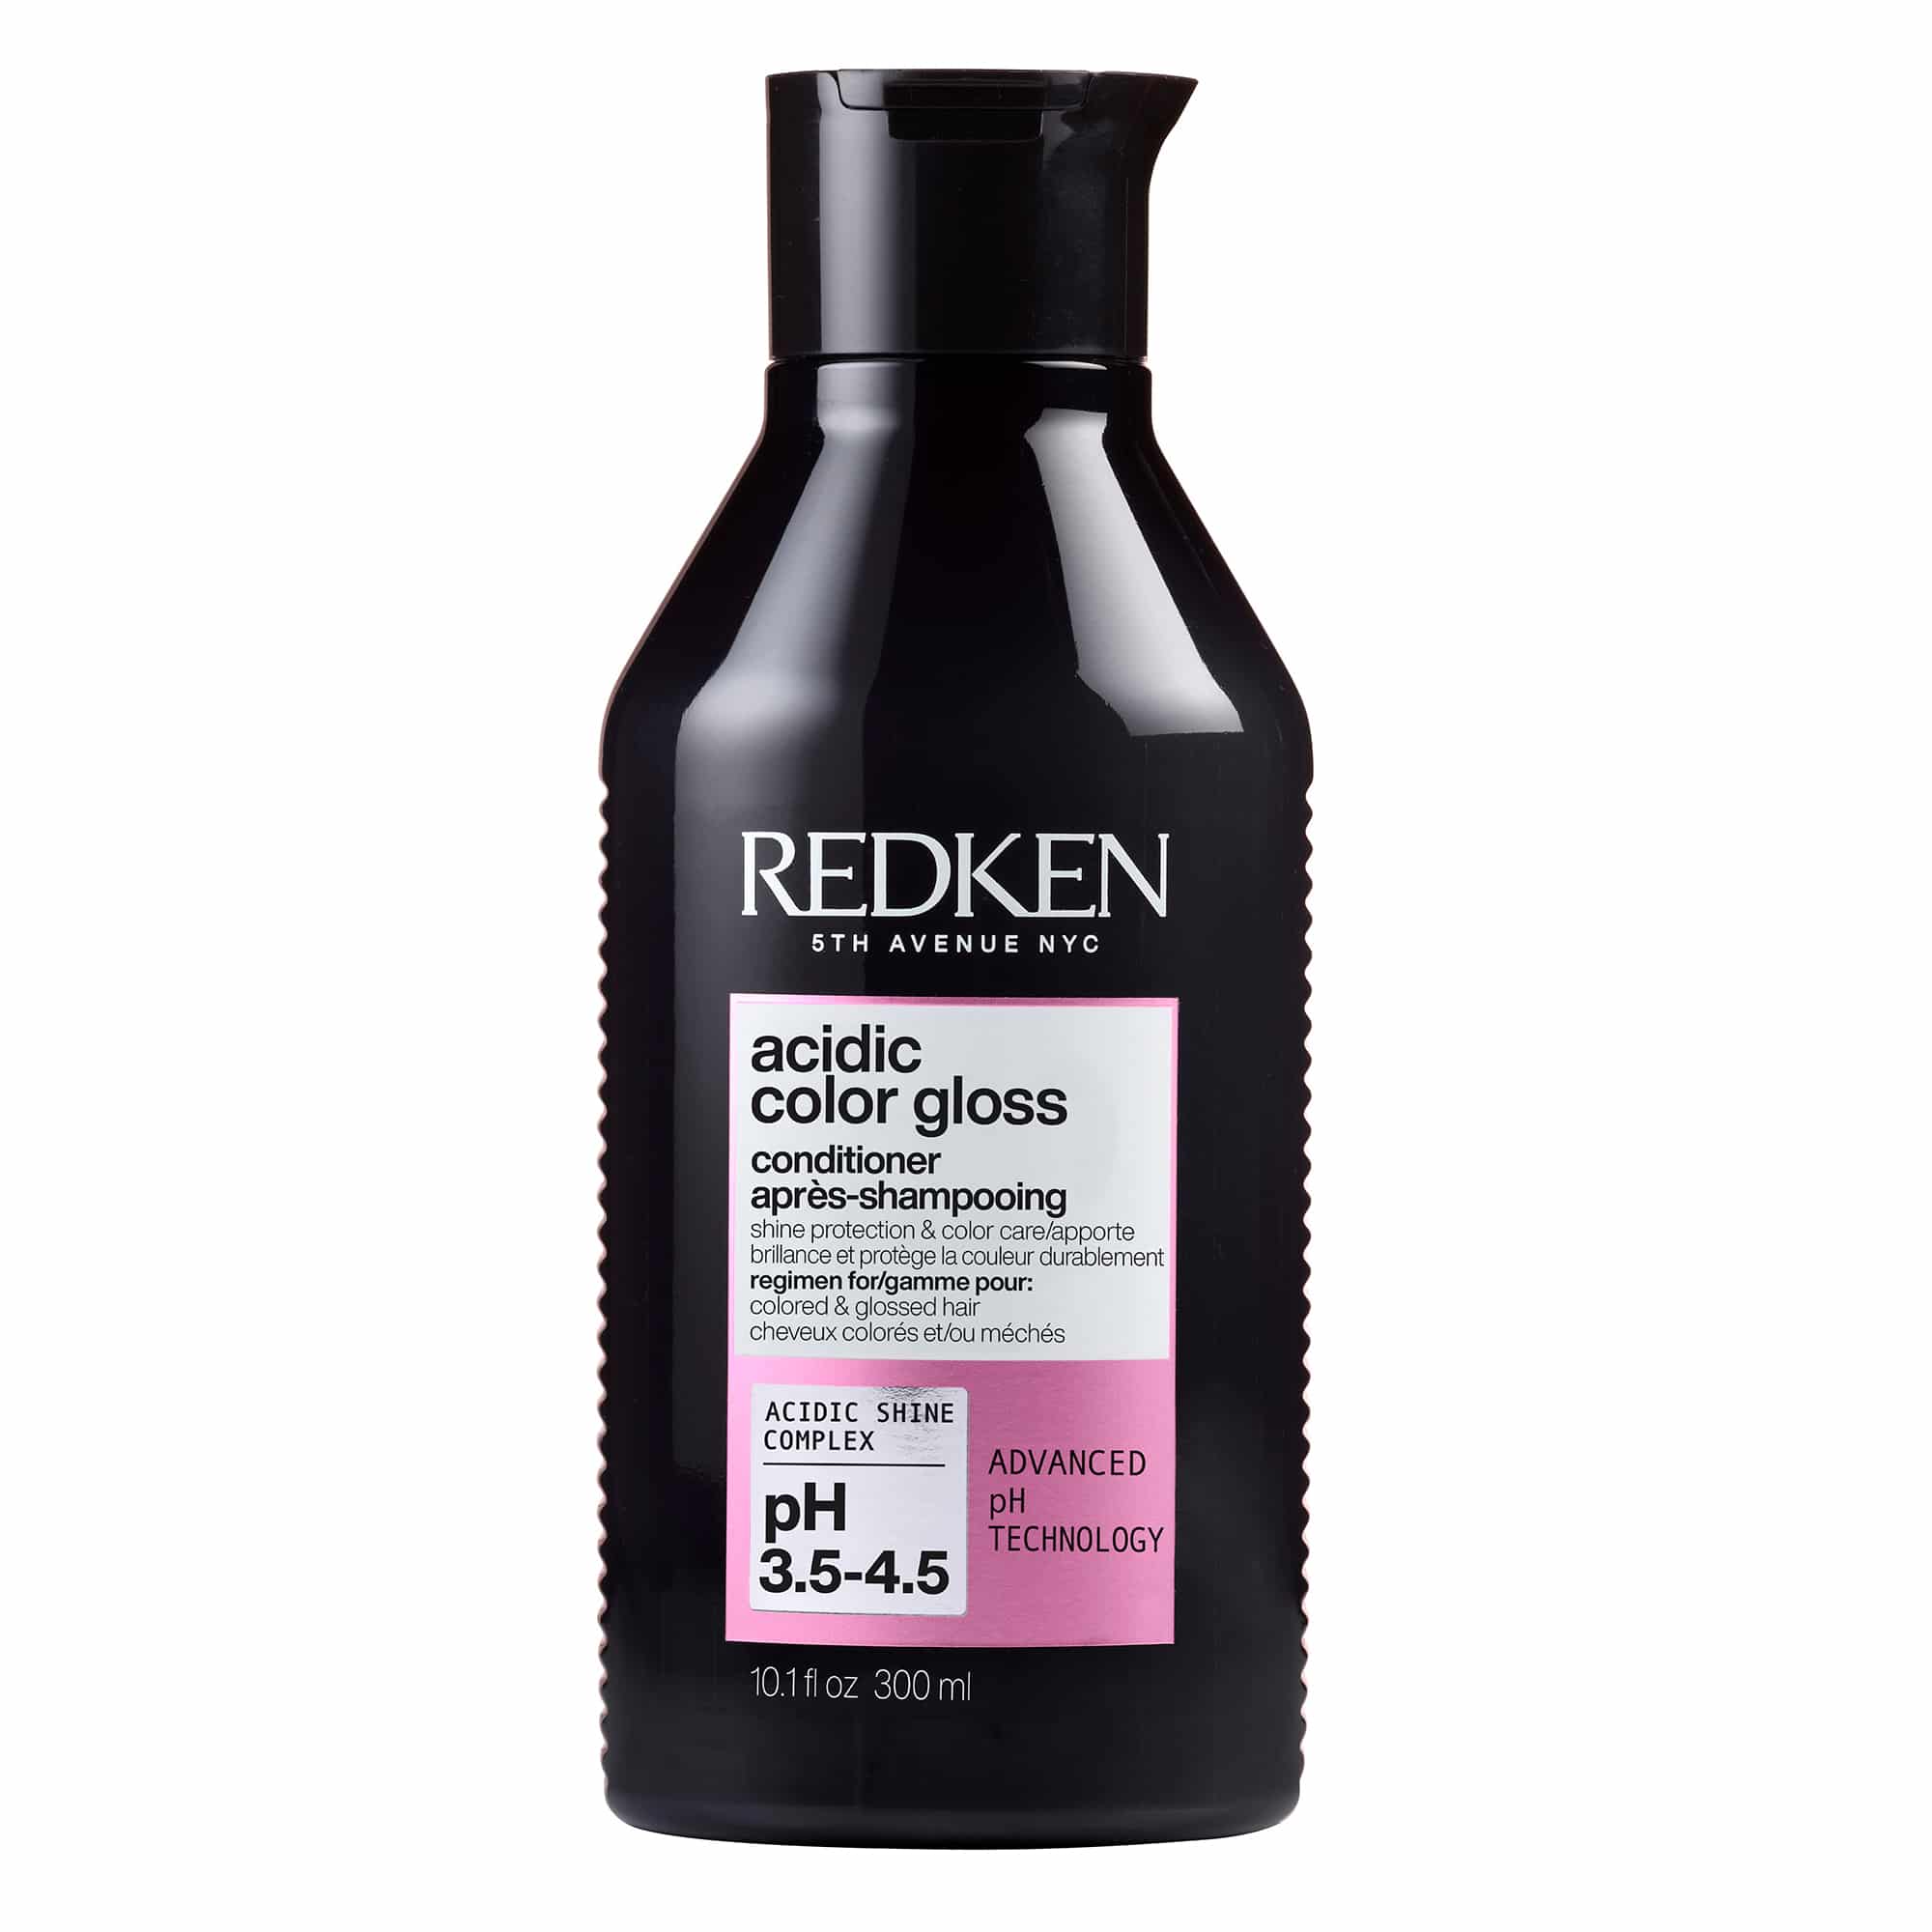 Redken - Acidic Color Gloss Conditioner 300ml